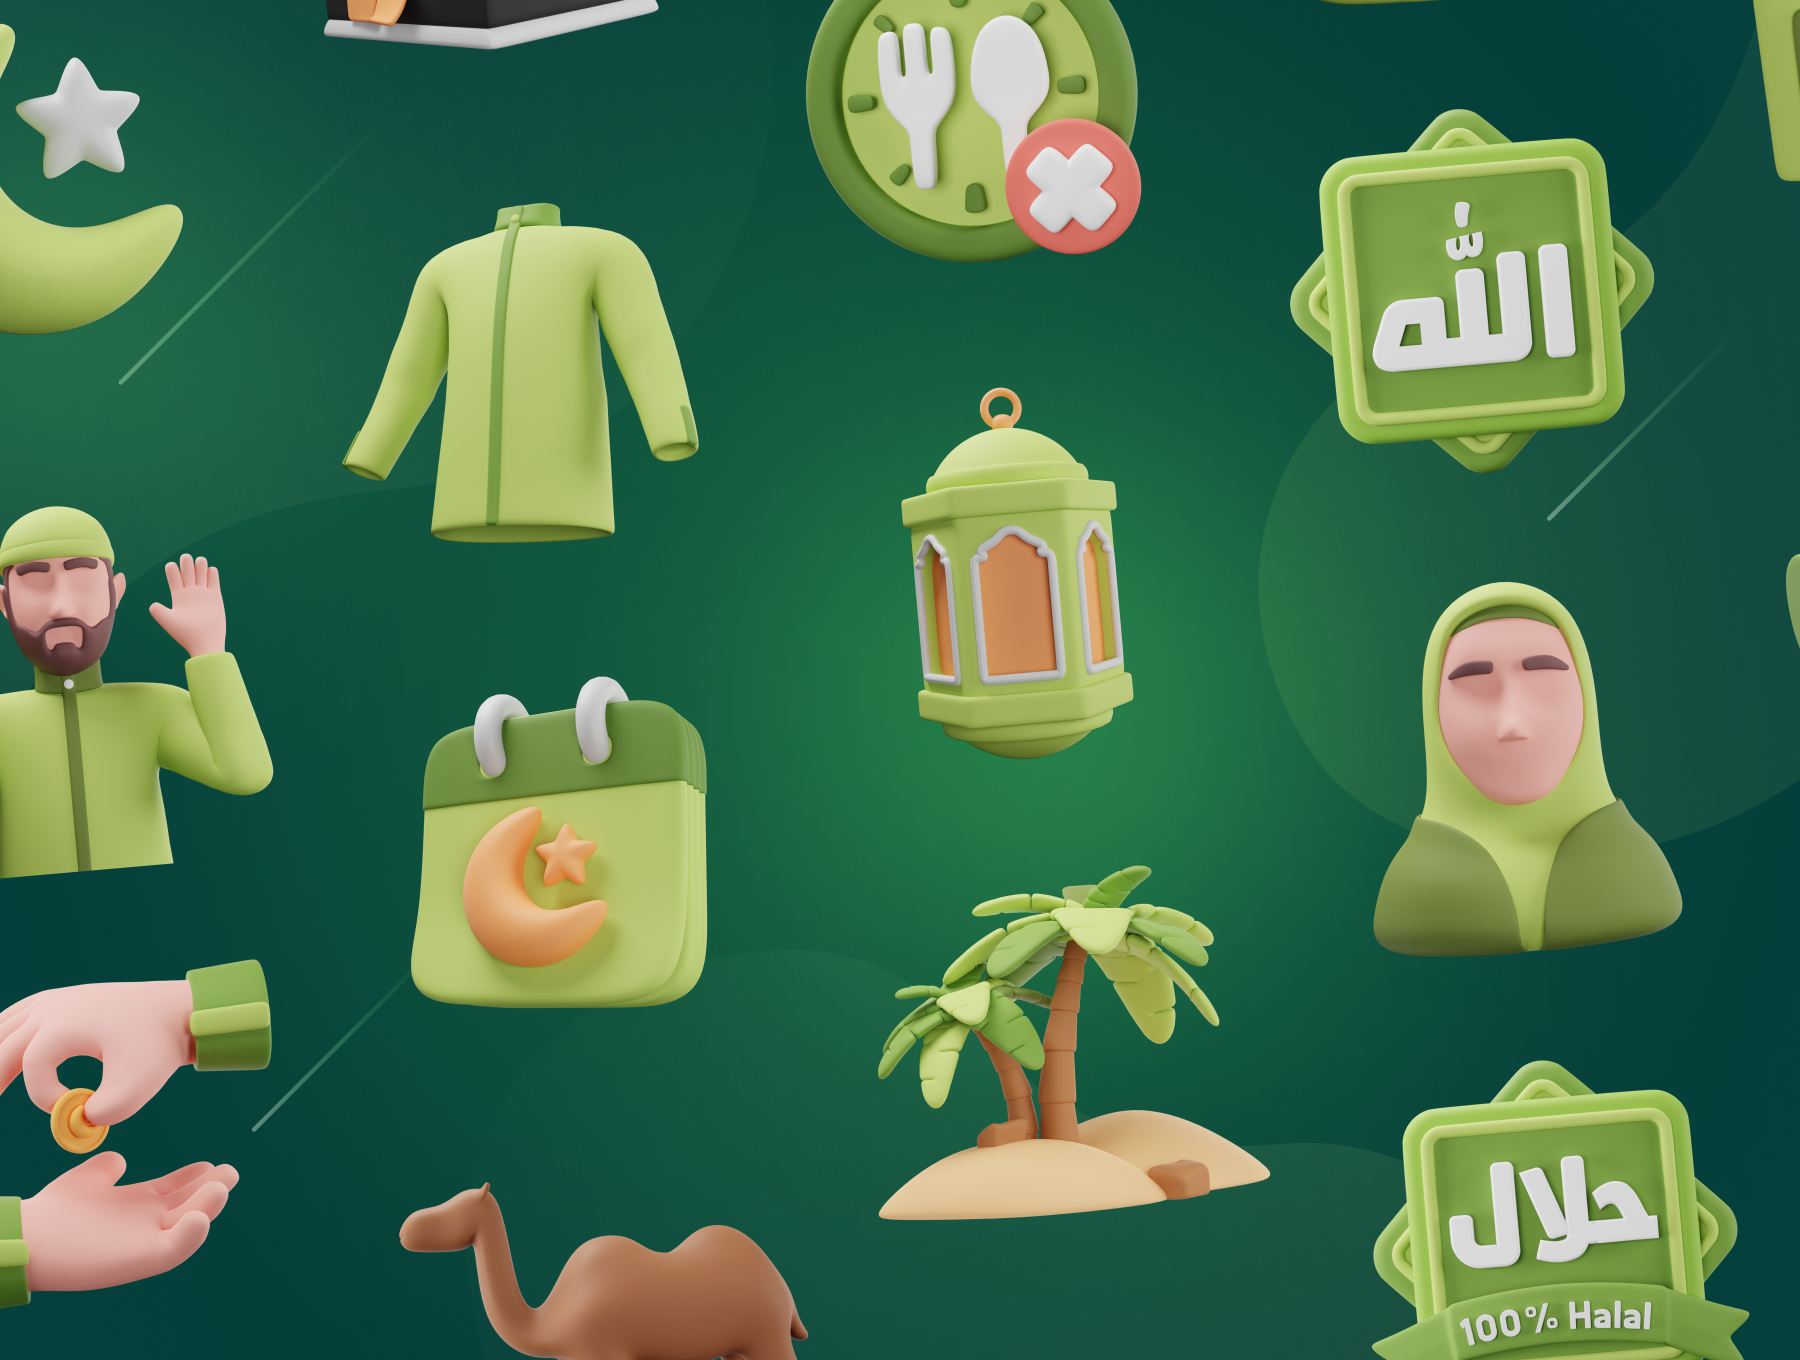 Islamy-伊斯兰和斋月3D图标套装 Islamy - Islamic & Ramadan 3D Icon Set blender格式-3D/图标-到位啦UI